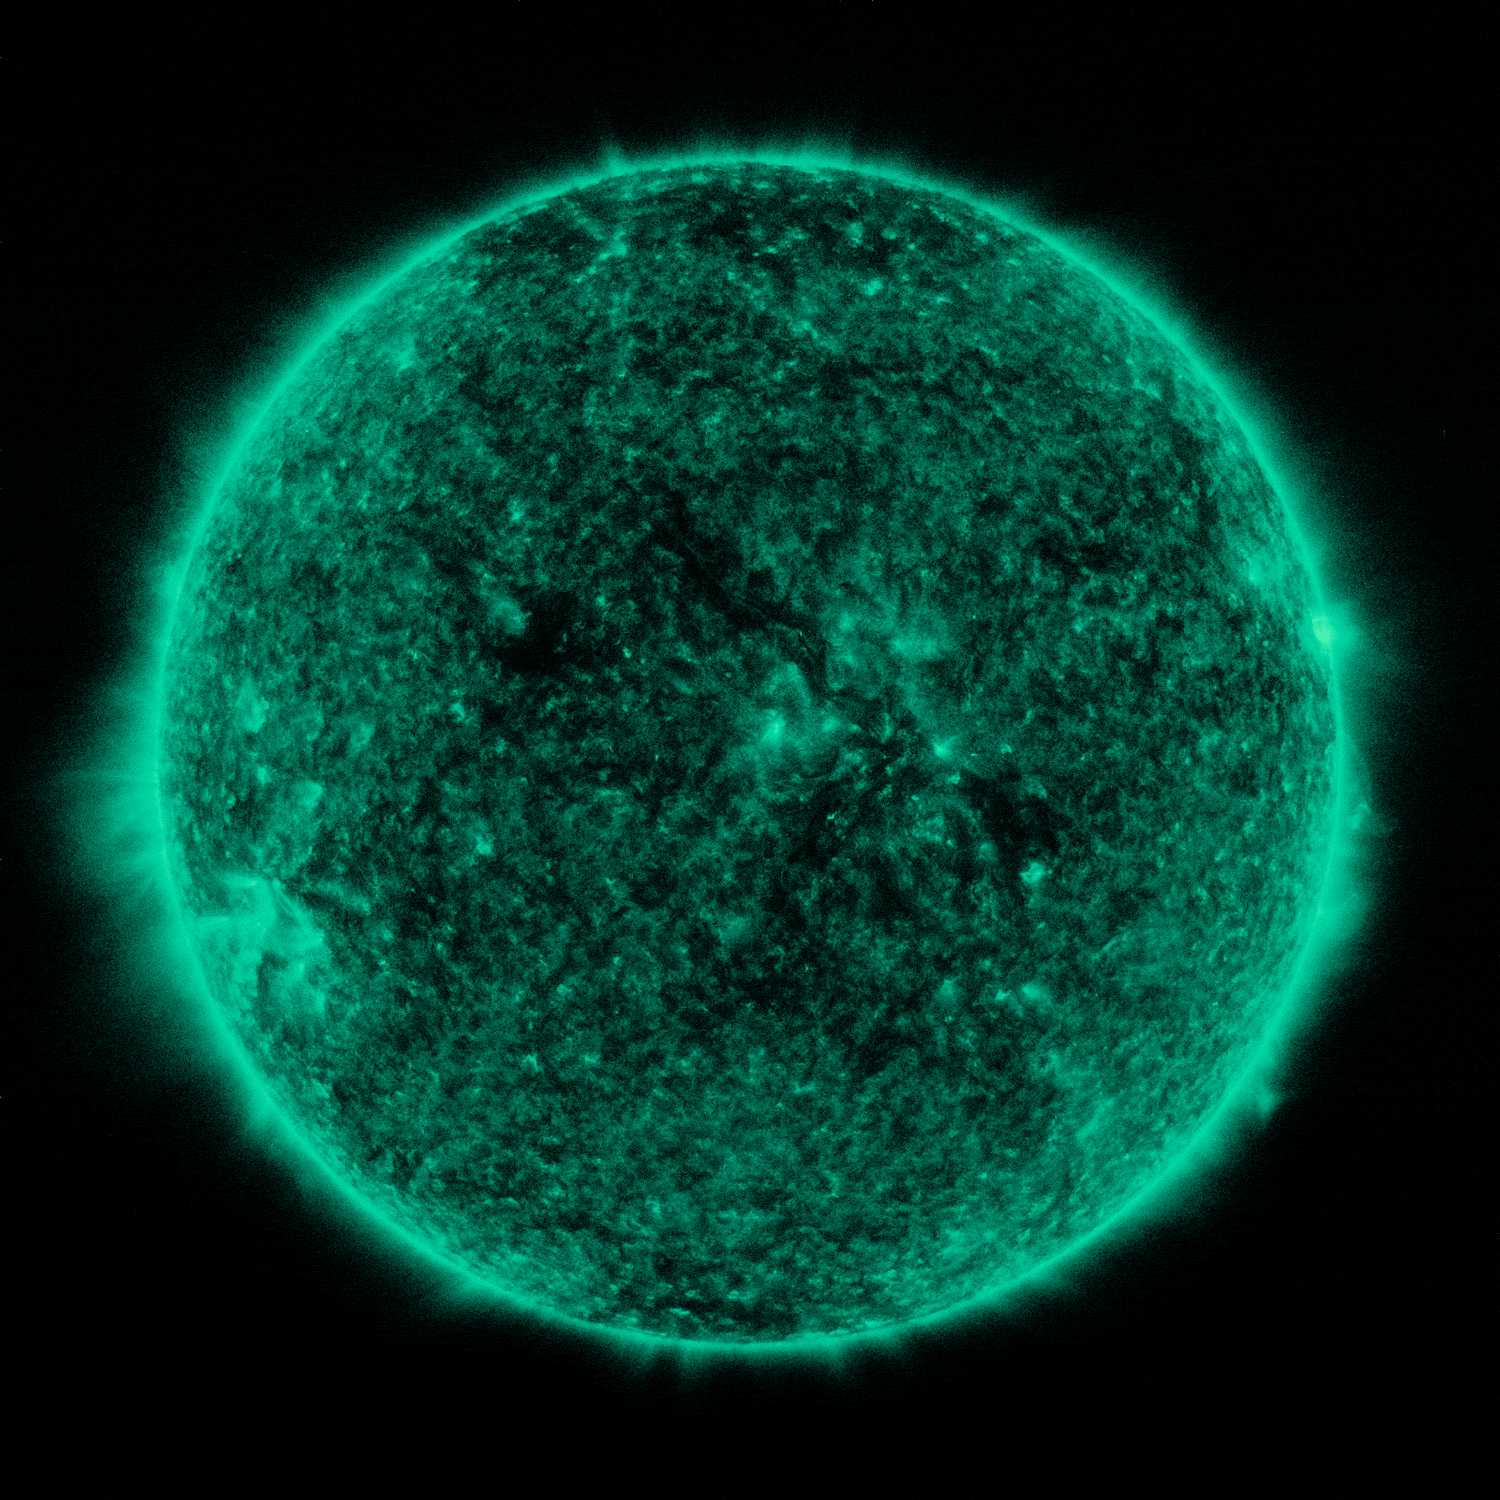 Снимки солнца. Зелёная звезда в космосе. Ультрафиолетовые снимки солнца. Космические объекты.